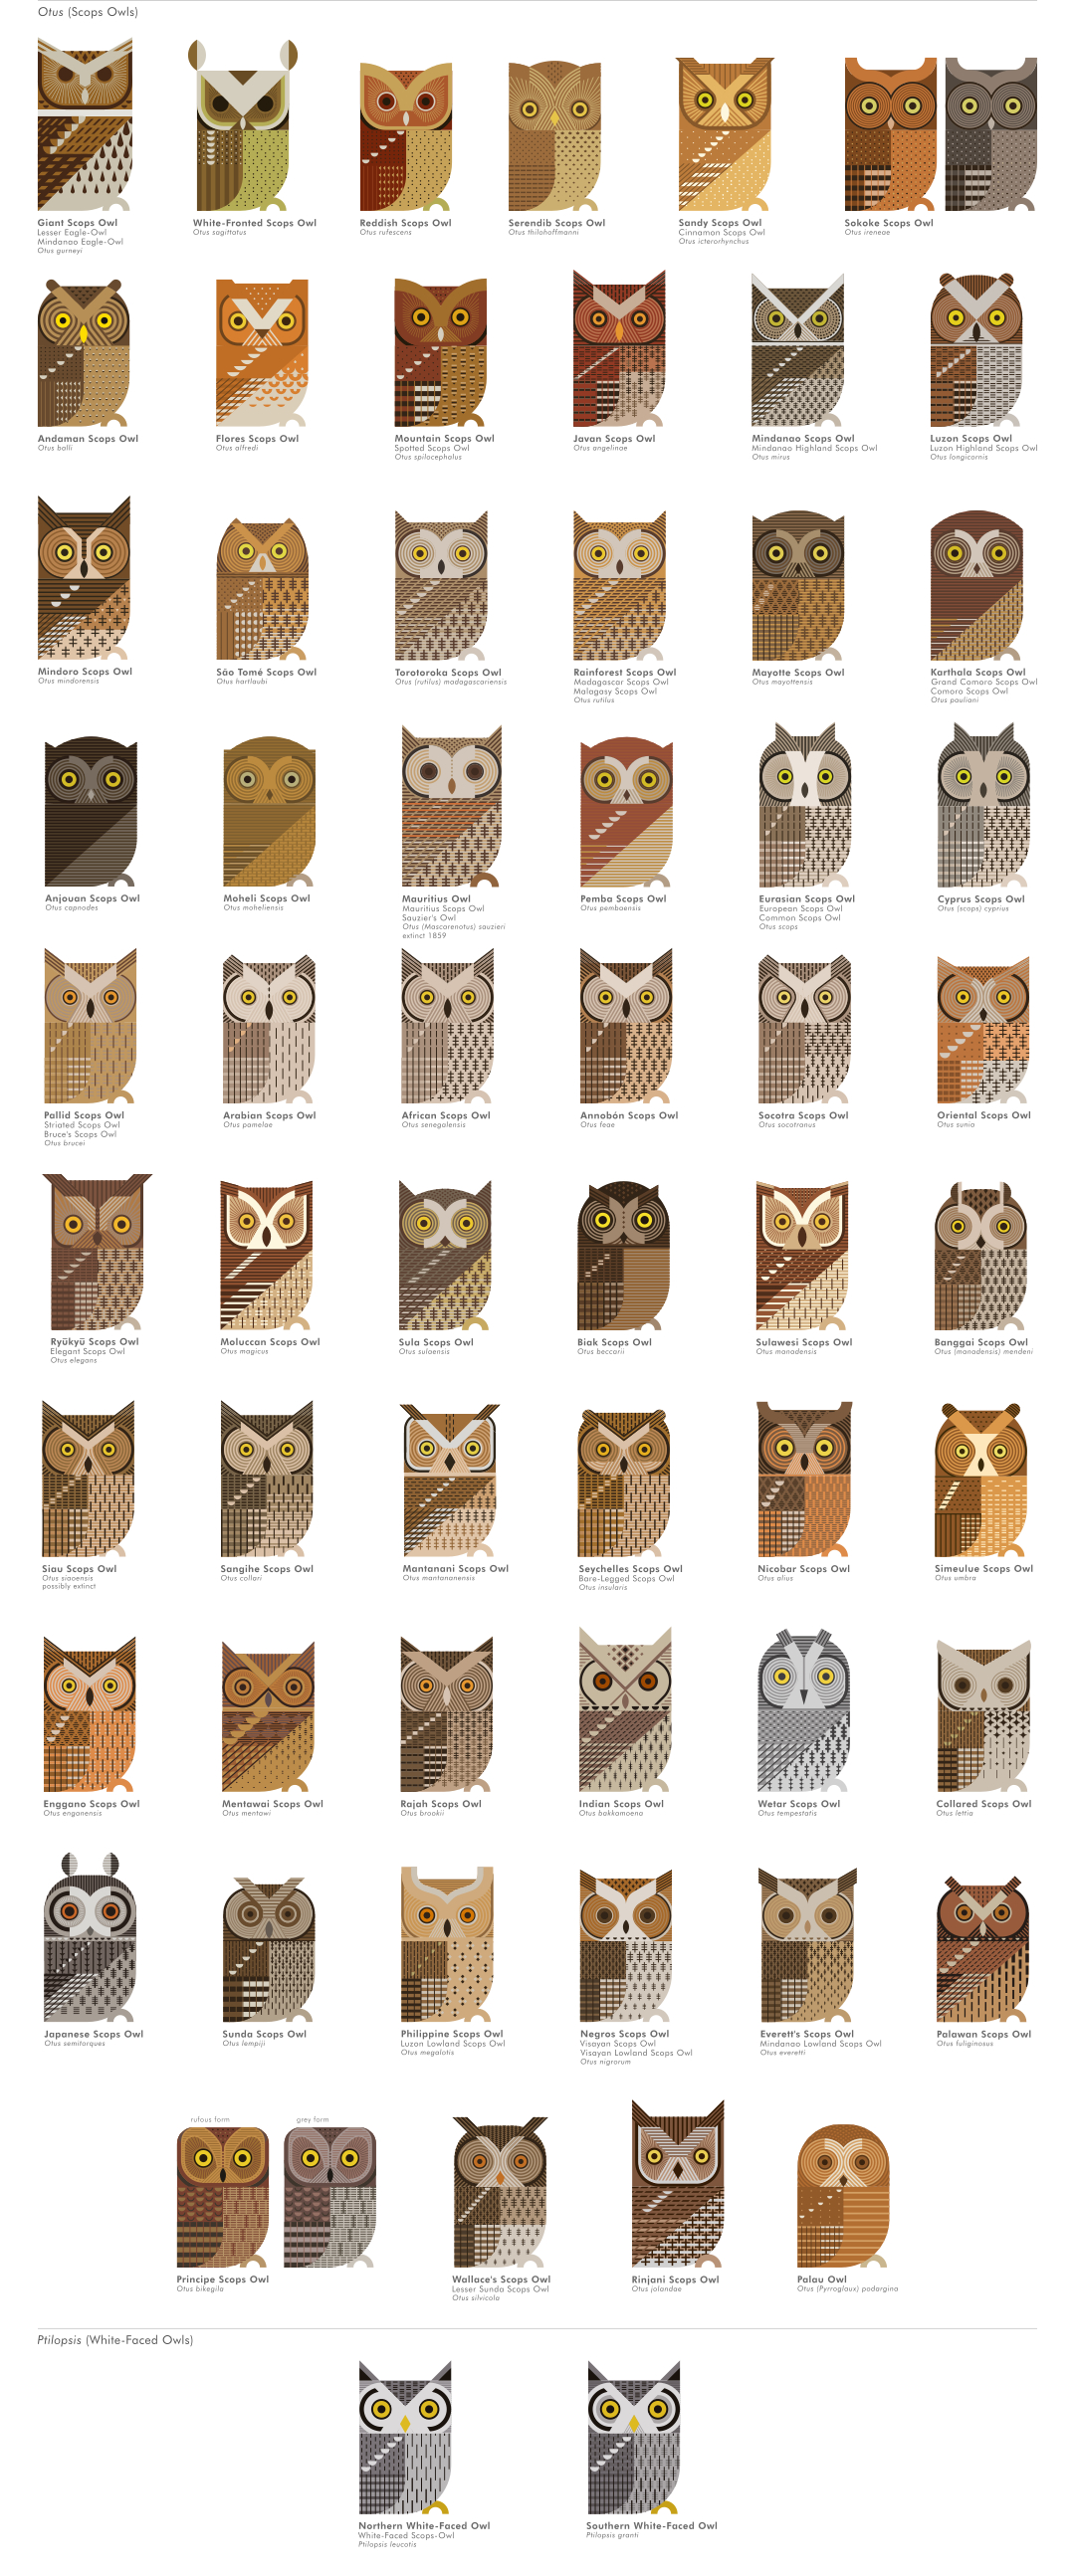 scott partridge - ave - avian vector encyclopedia - scops owls otus - strigidae - strigiformes - bird vector art